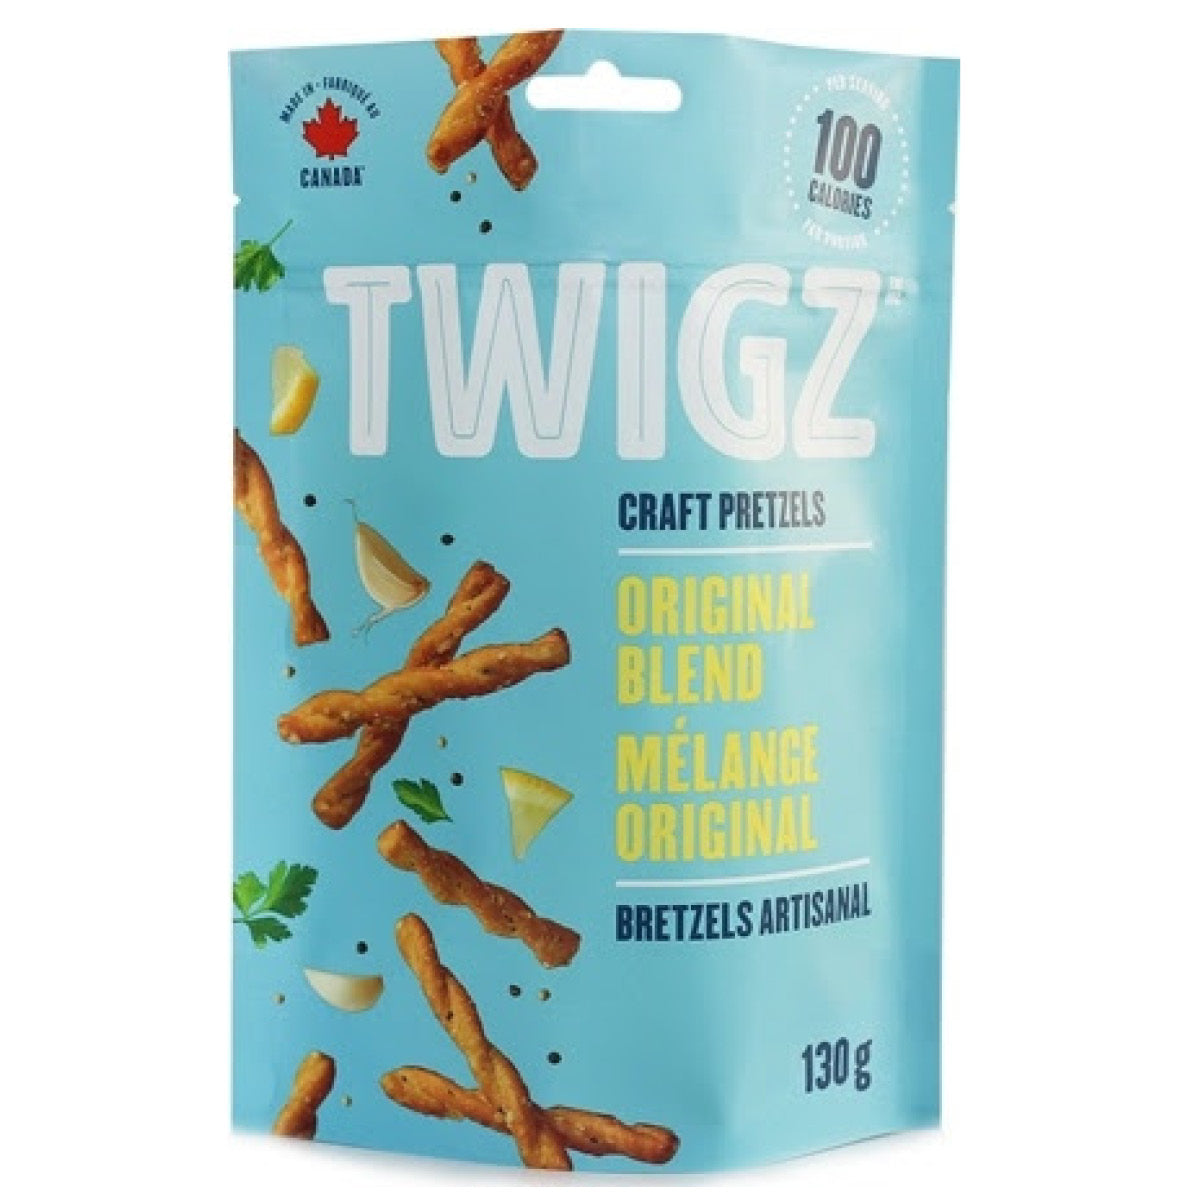 Twigz Original Blend, 130g